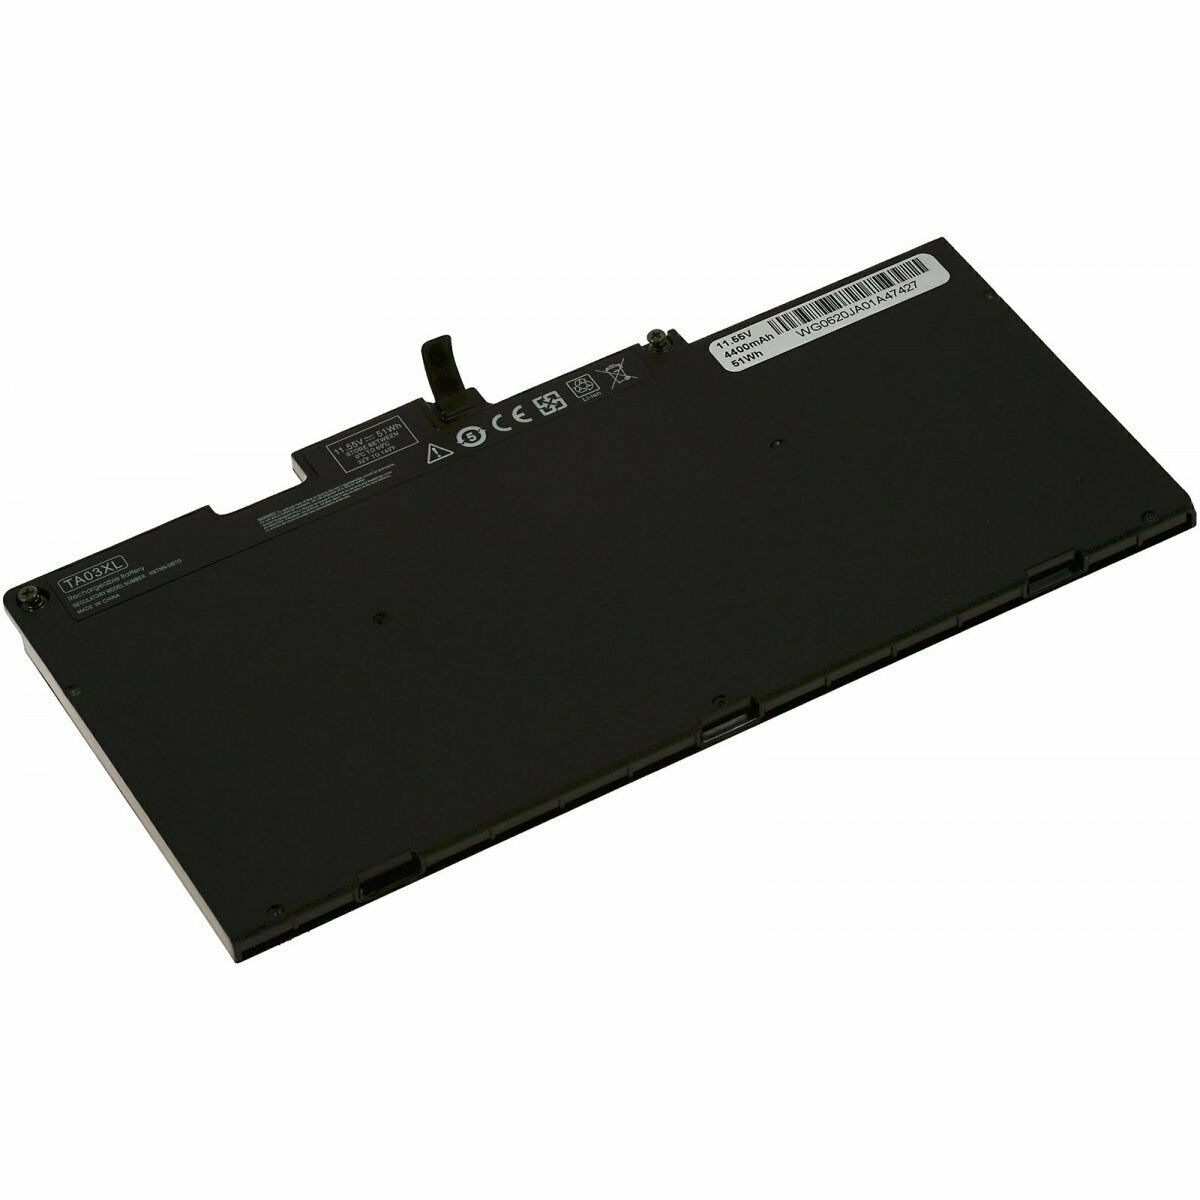 Hp TA03XL EliteBook 755 G4 854108-850 996QA101H TA03051XL HSTNN-172C-4 kompatibelt batterier